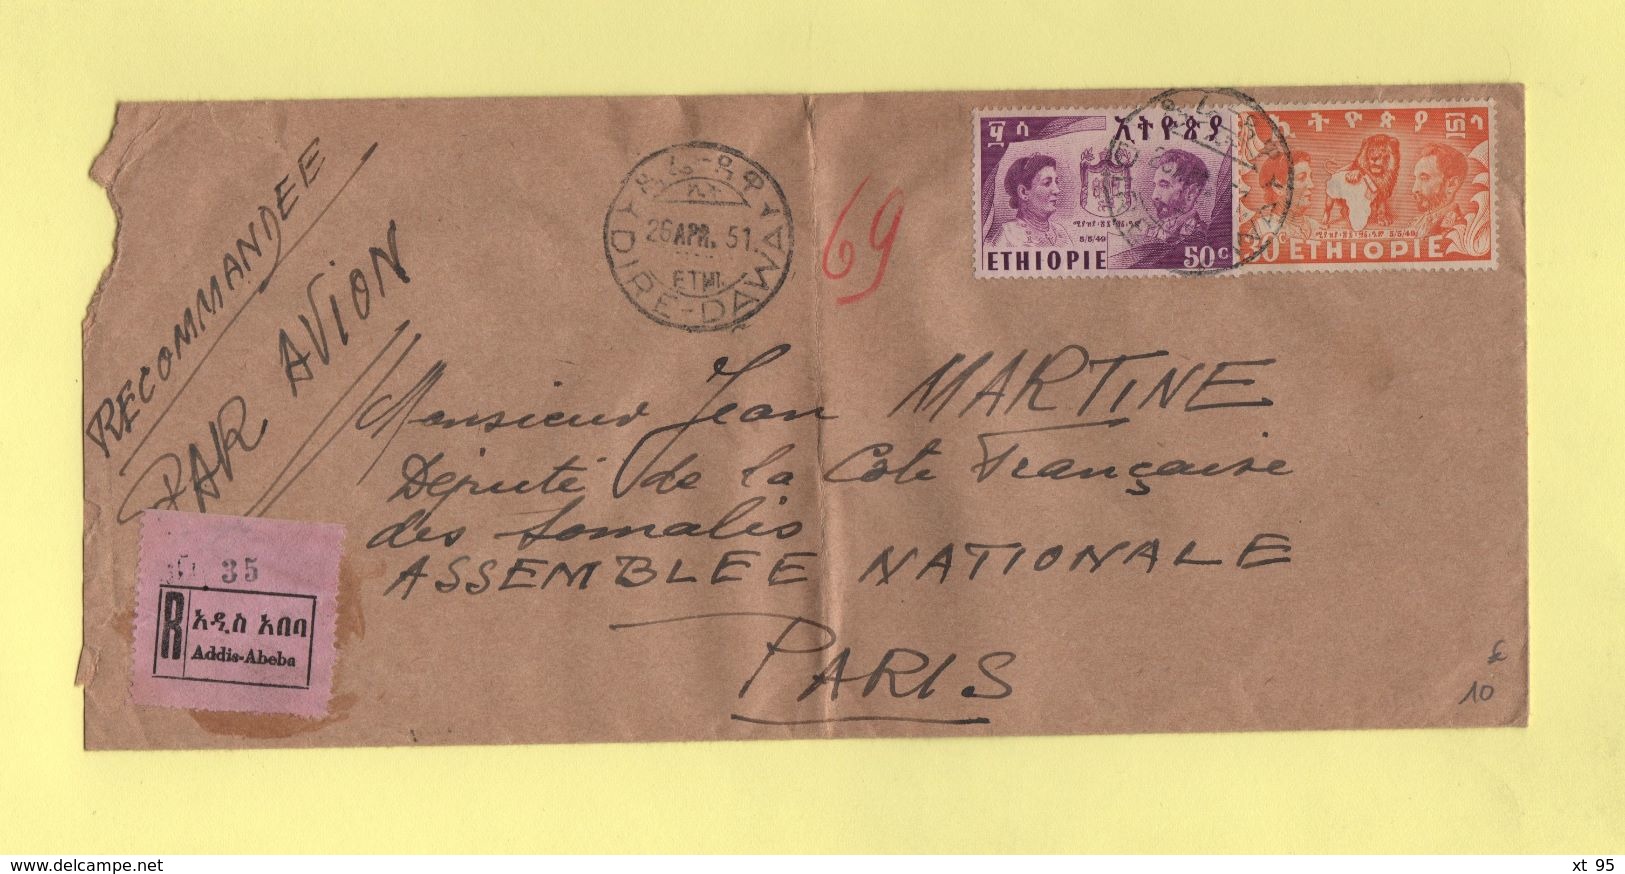 Ethiopie - Dire Dawa - Addis Abeda - 26 Avril 1951 - Recommande Pour La France - Ethiopie